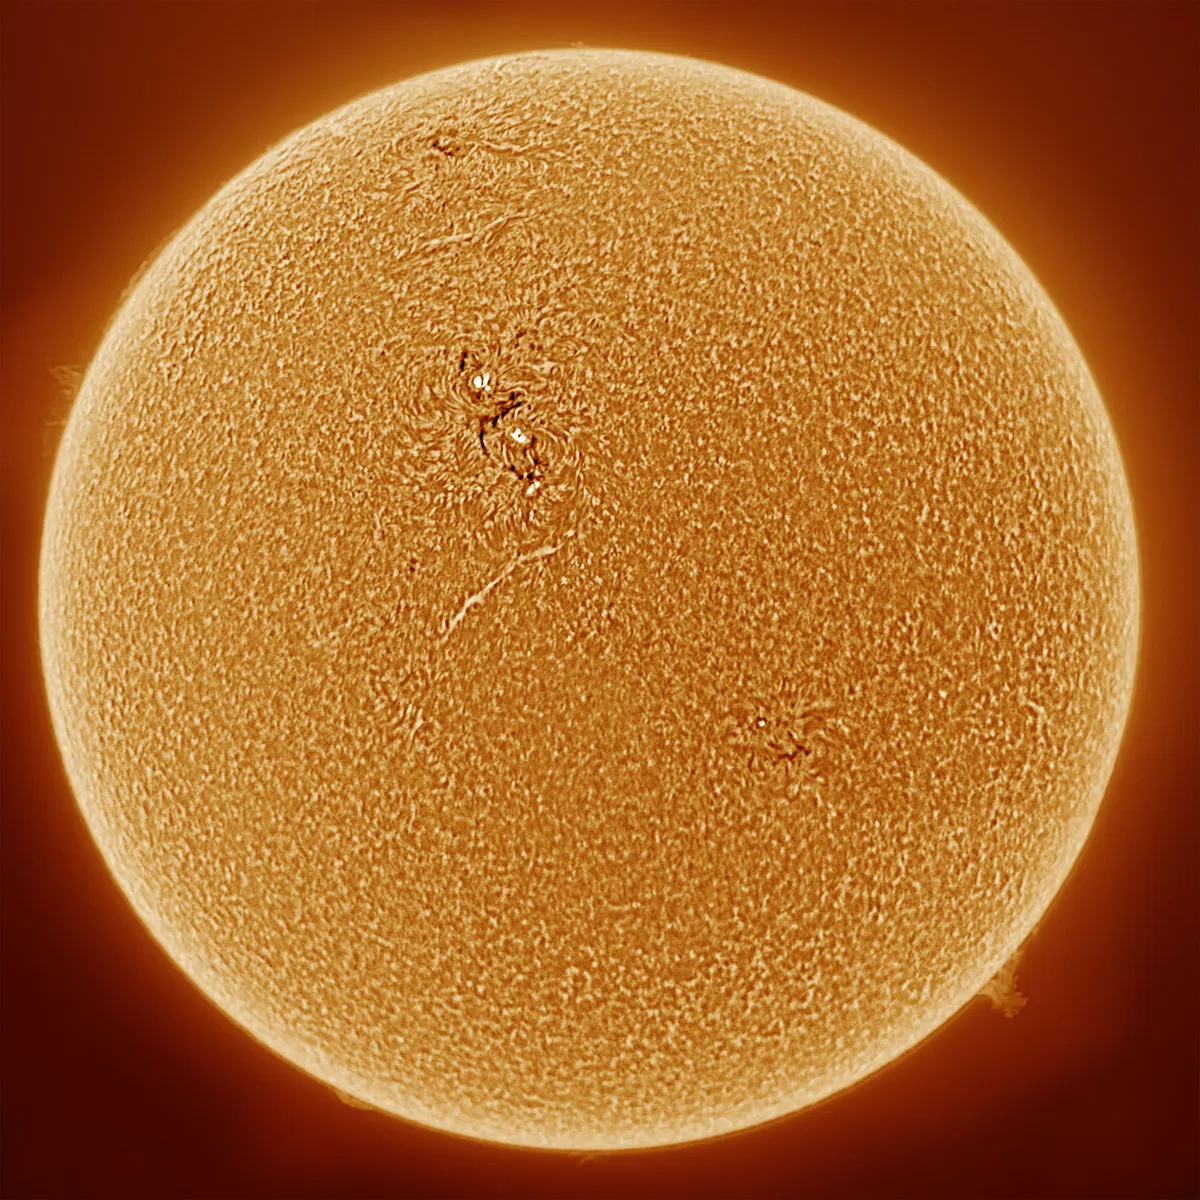 The Sun in Hydrogen-Alpha by Bill McSorley, Leeds, UK. Equipment: 70mm Tele-Vue refractor, Coronado Hydrogen Alpha filters, QHY5L-II colour planetary camera, Celestron Alt-Az mount.